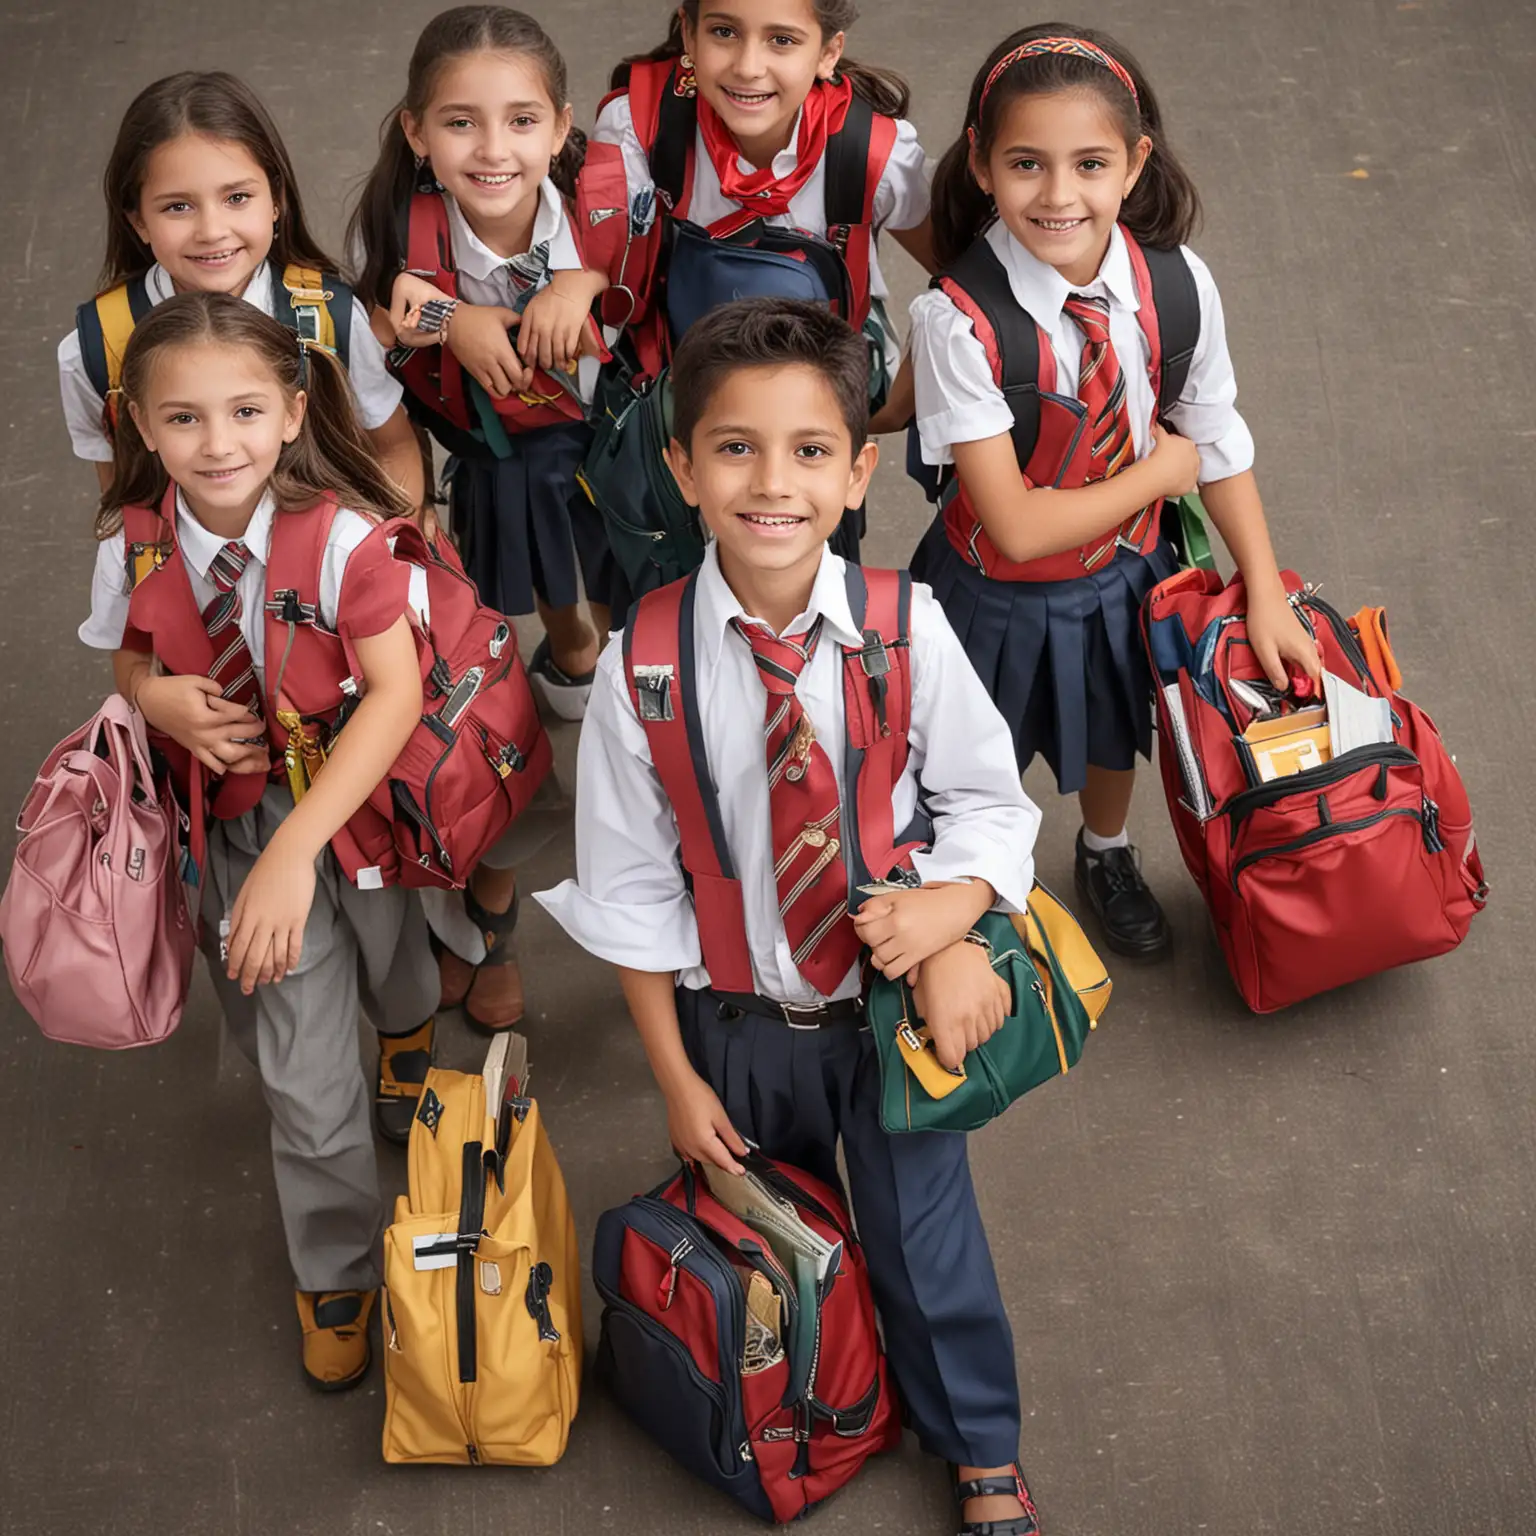 Joyful School Children with Customized Accessories